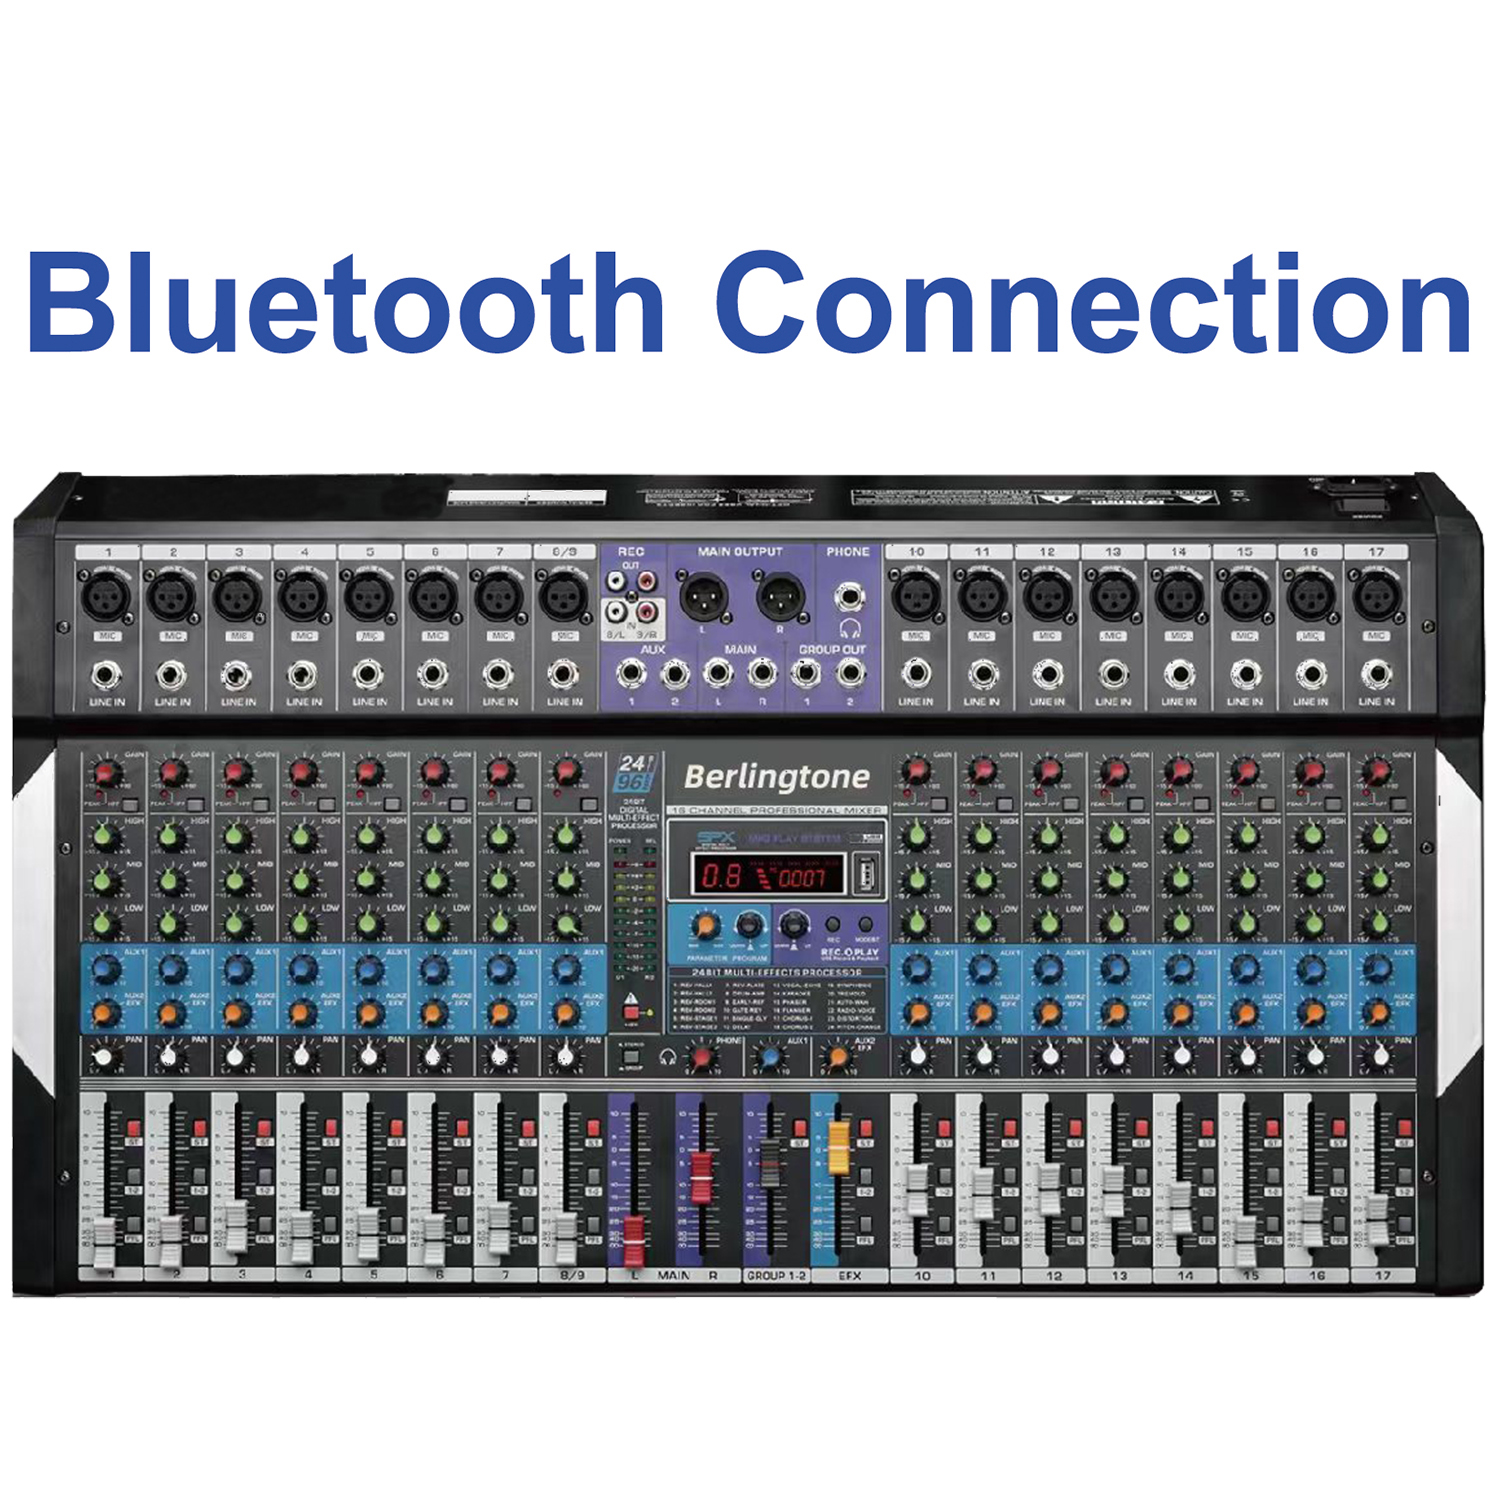 Berlingtone BR-16MX, 16 -Channel Professional Bluetooth Studio Audio Mixer  - DJ Sound Controller, USB MP3 Player, PC Recording